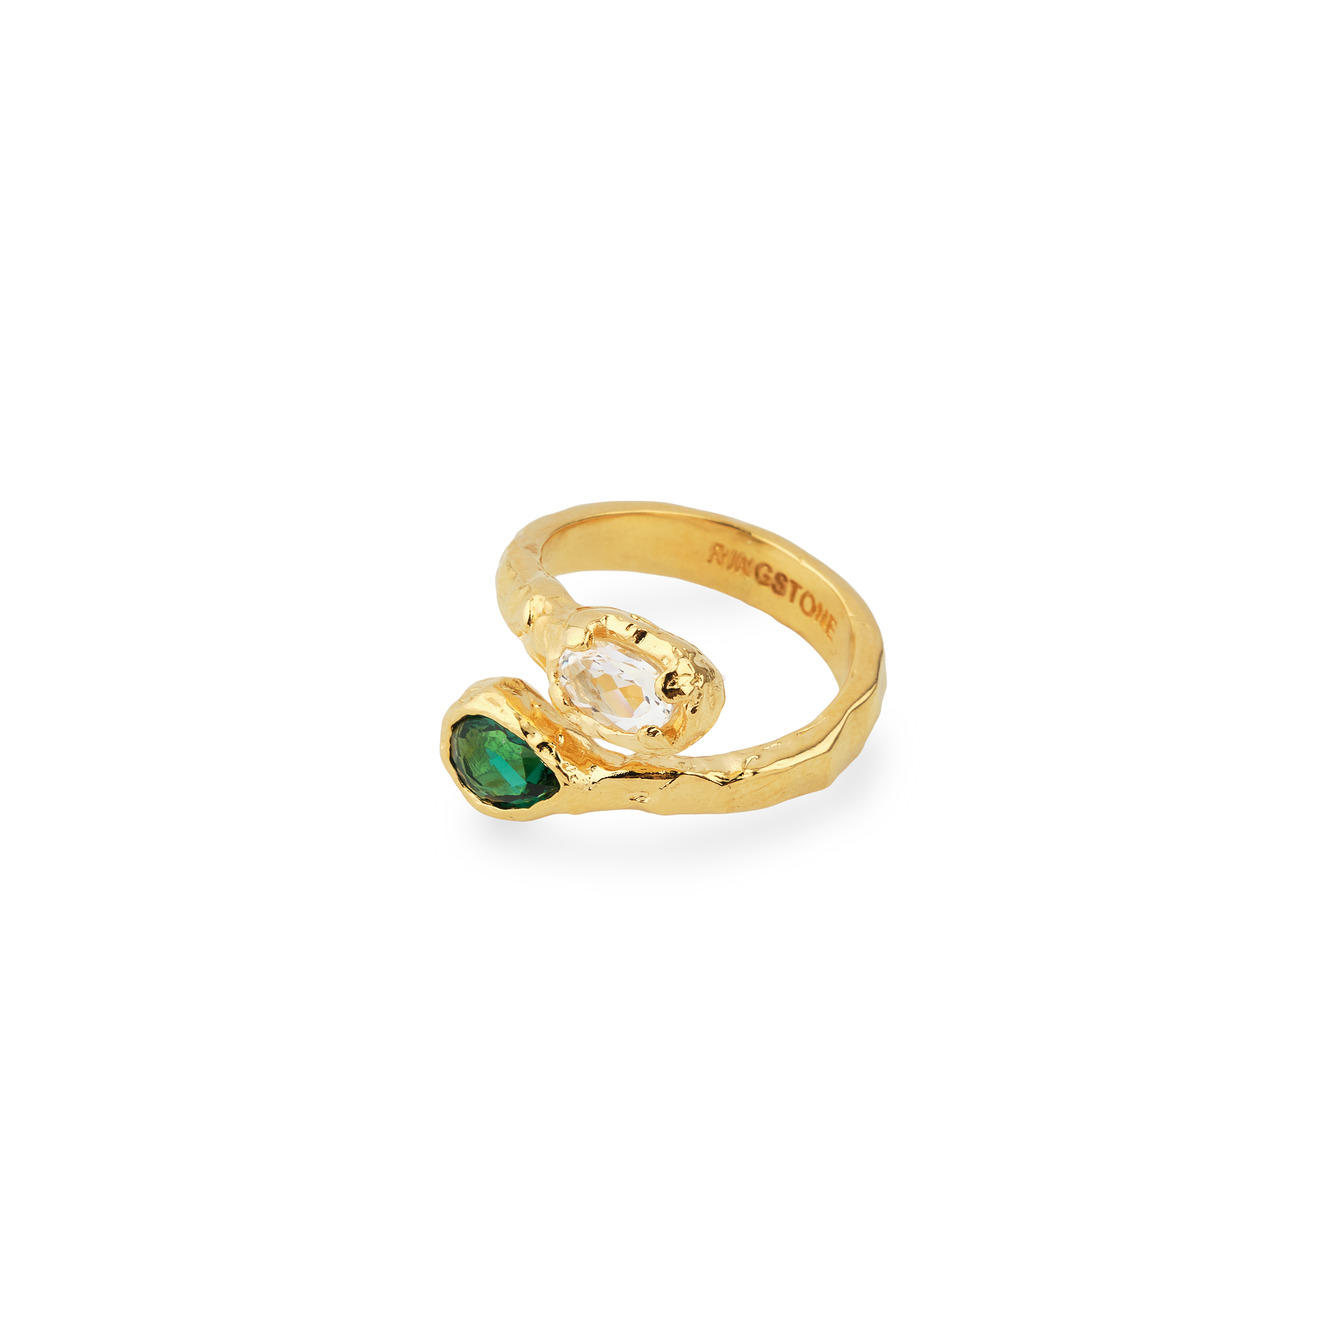 Ringstone Позолоченное кольцо DUO с турмалином и горным хрусталем позолоченное кольцо ringstone fortune